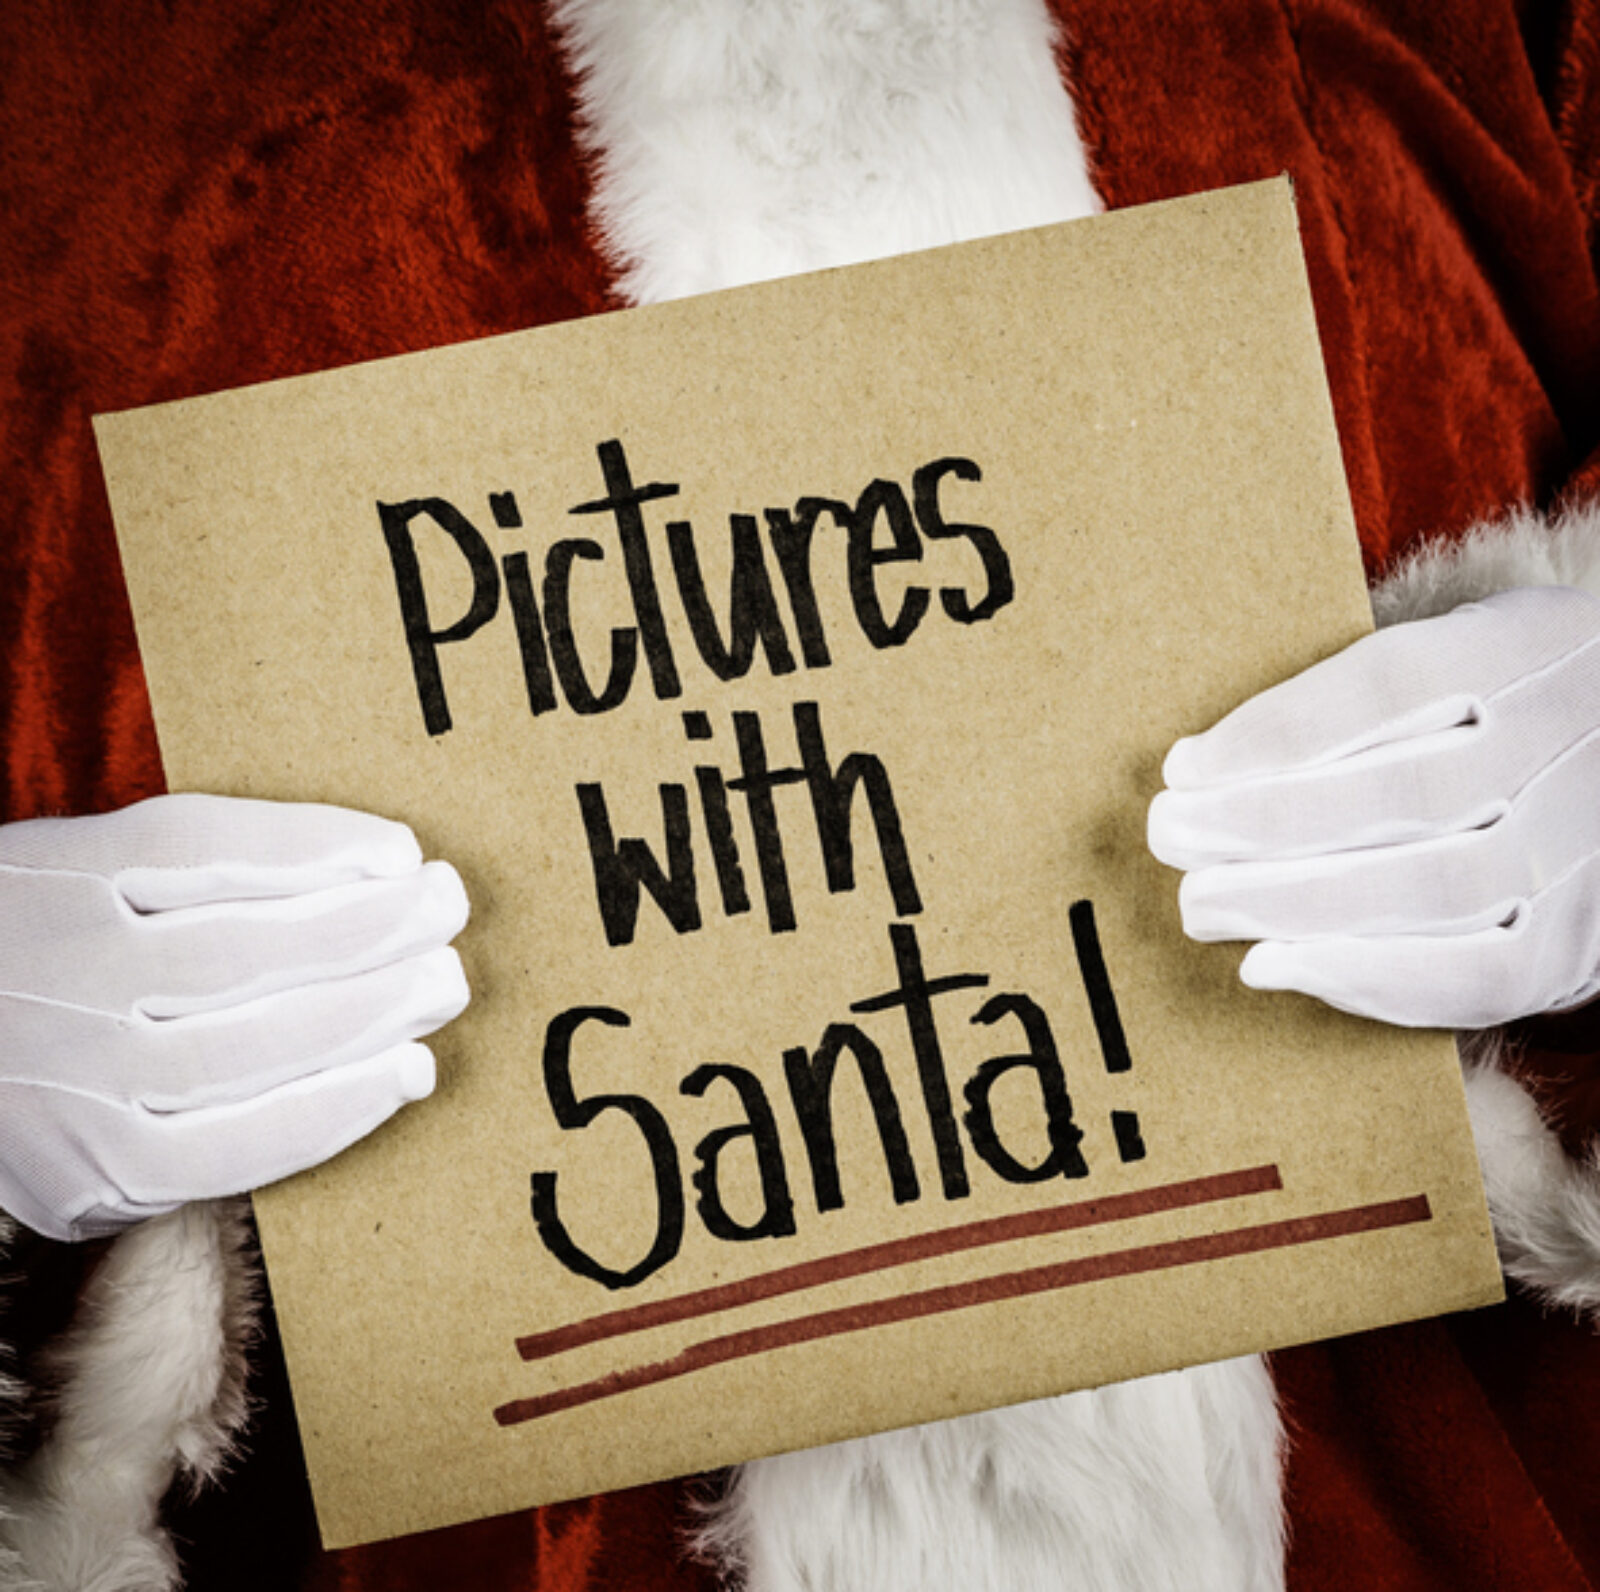 Santa Photos are Here!